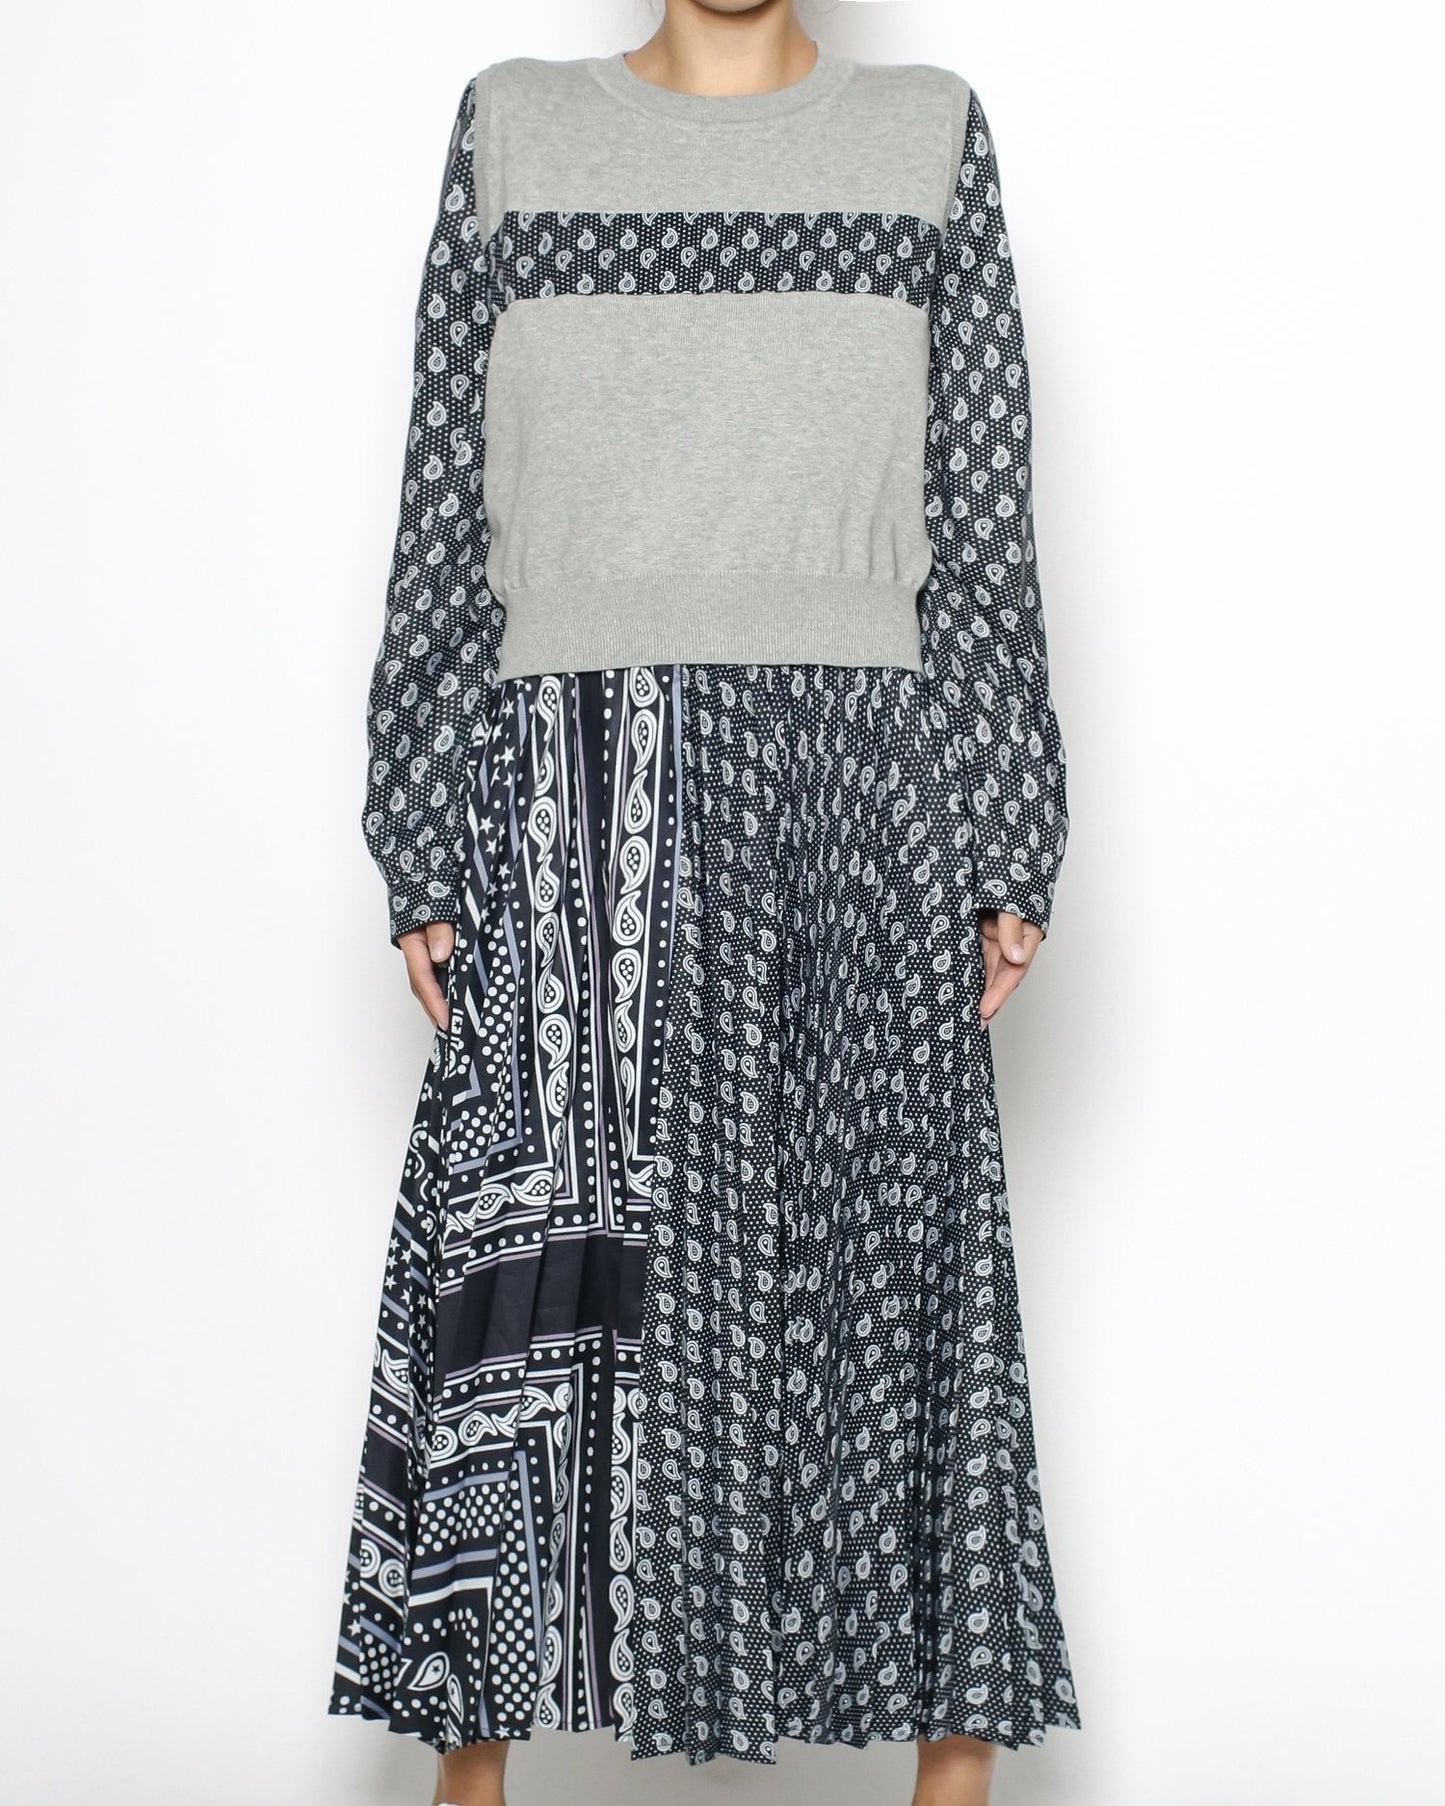 grey knitted top & navy pattern chiffon set dress *pre-order*